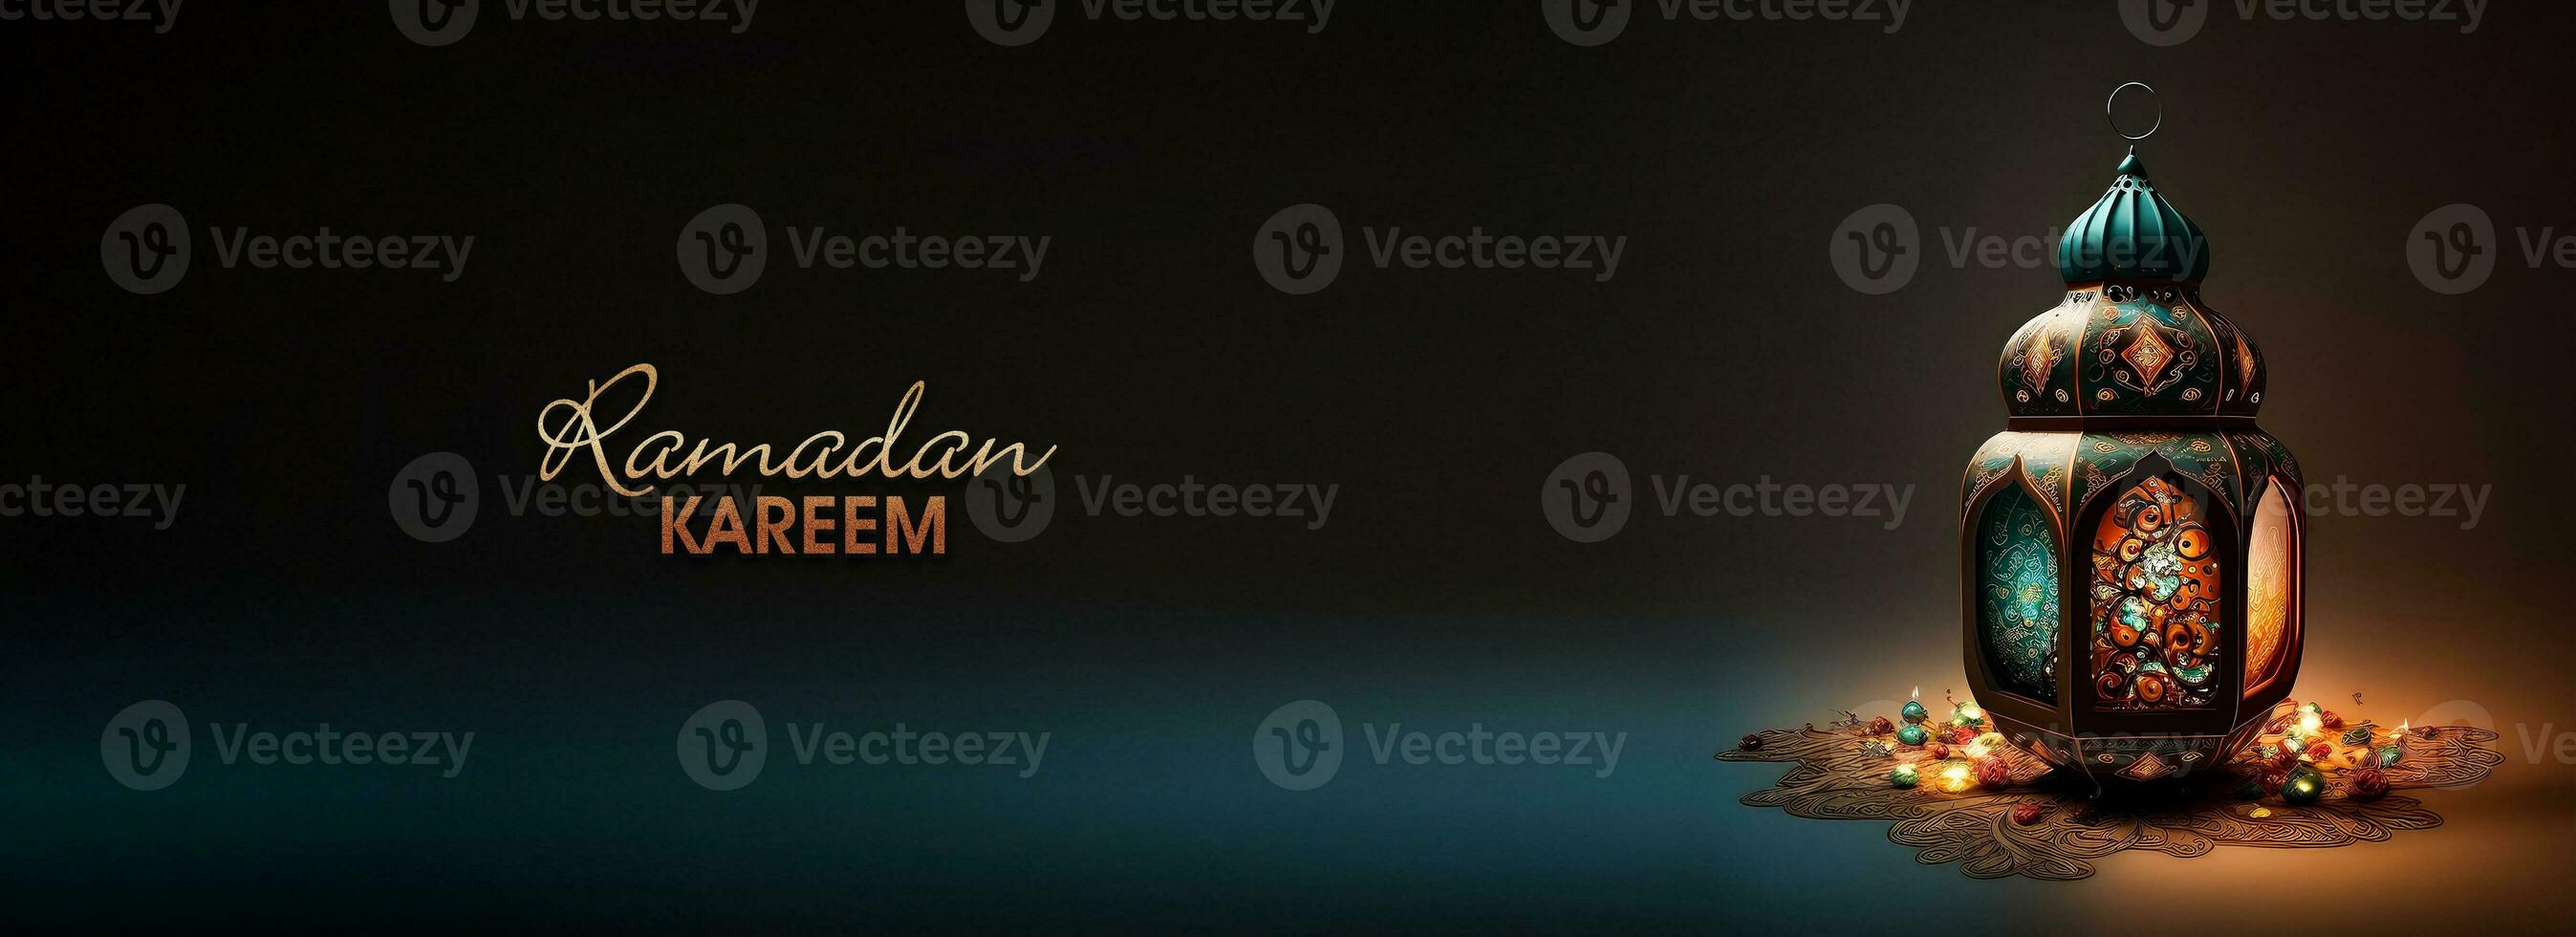 Ramadan Kareem Banner Design With Golden Glittery Text, 3D Render of Illuminated Arabic Lamp On Dark Background. photo